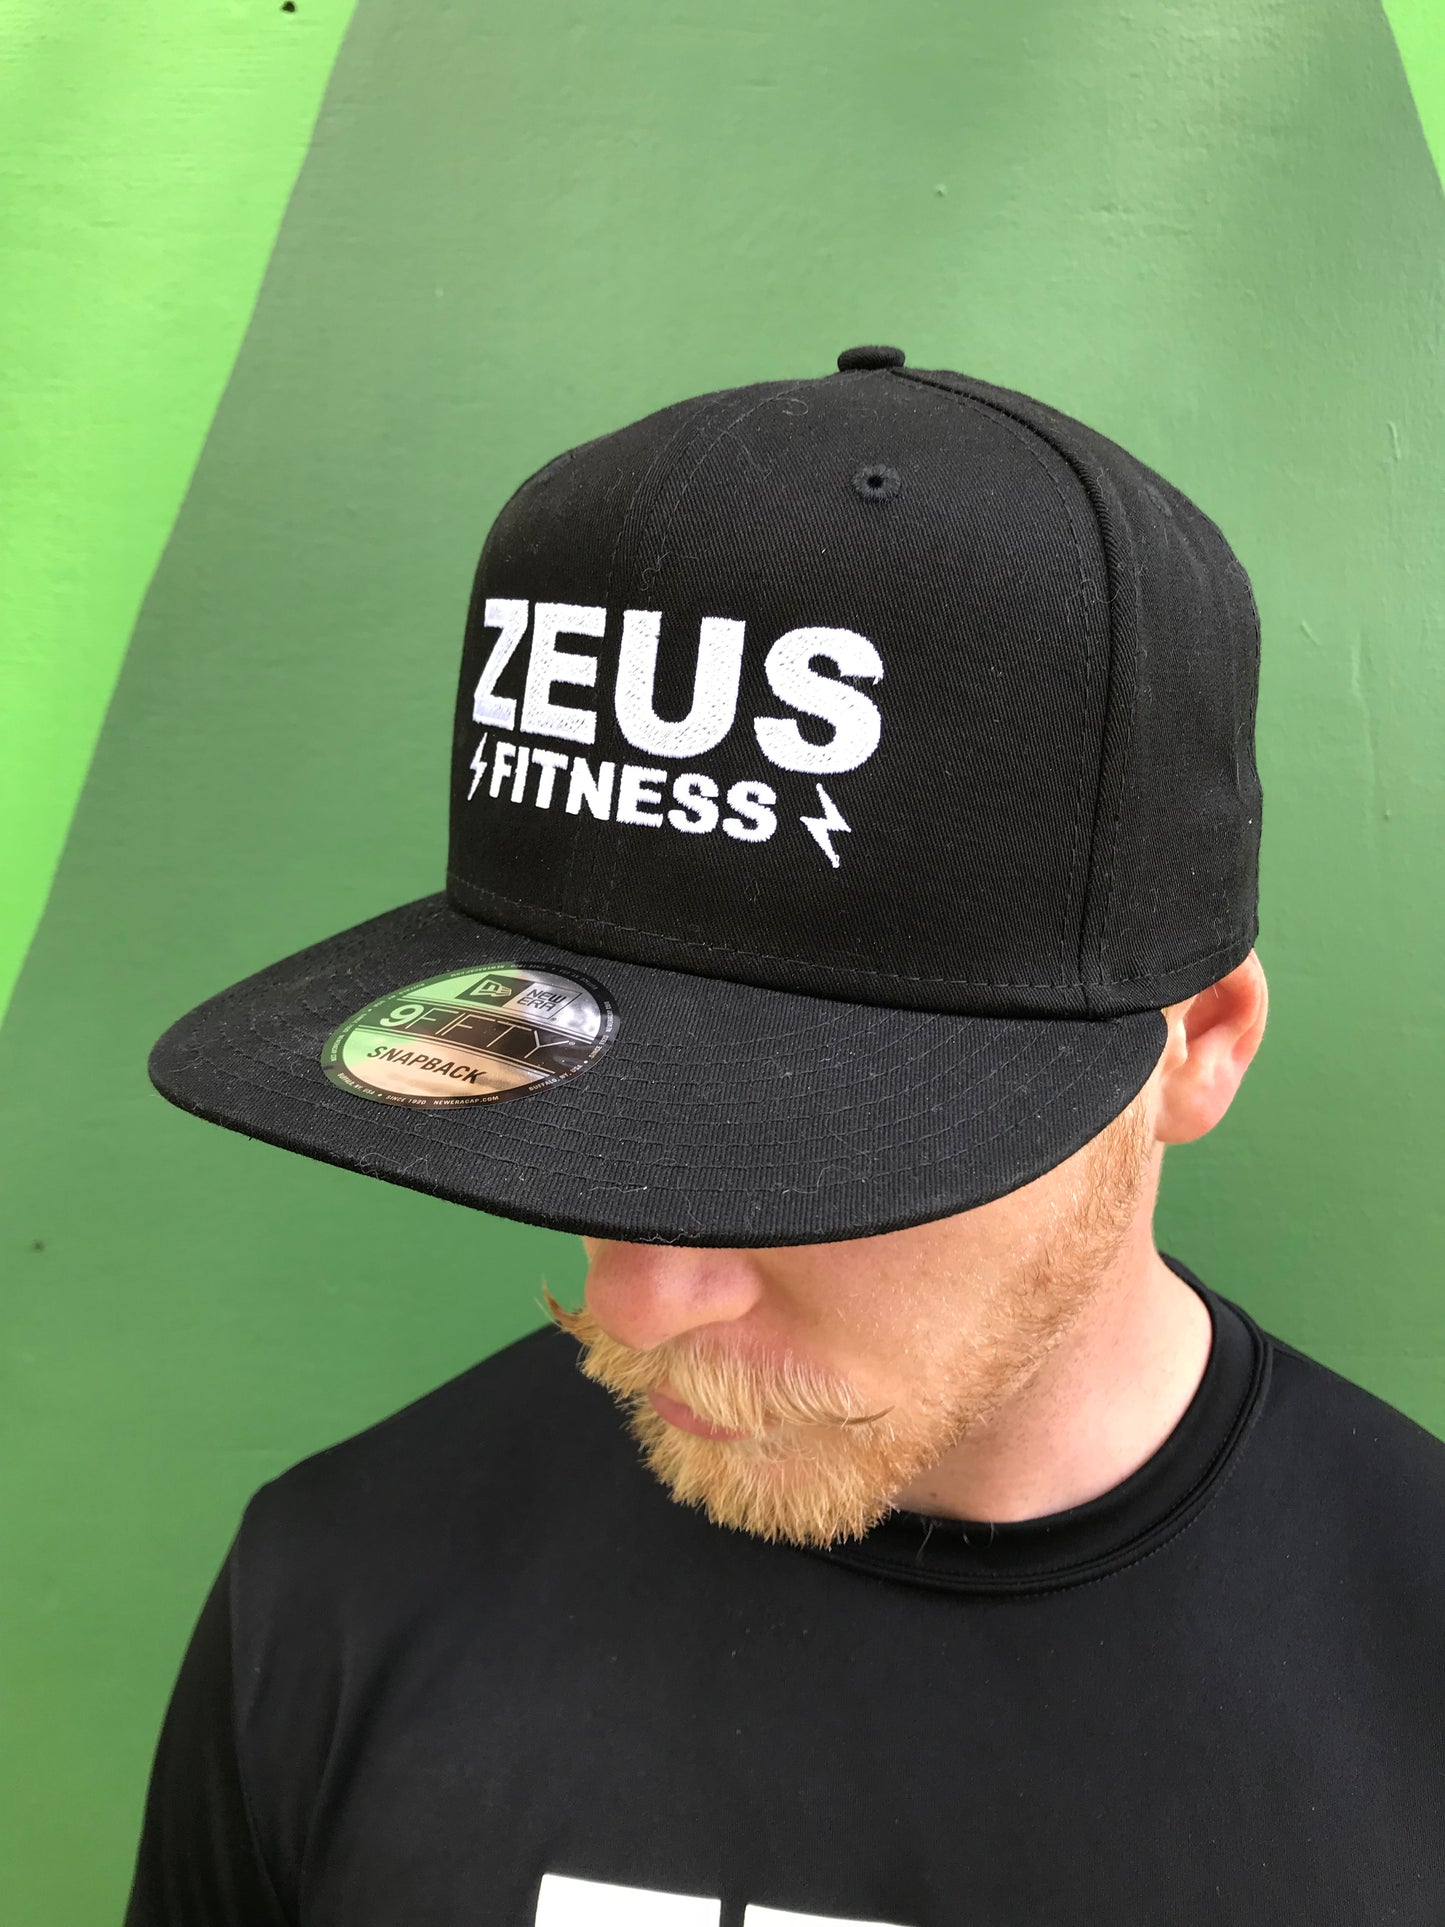 Zeus Fitness Snapback Cap